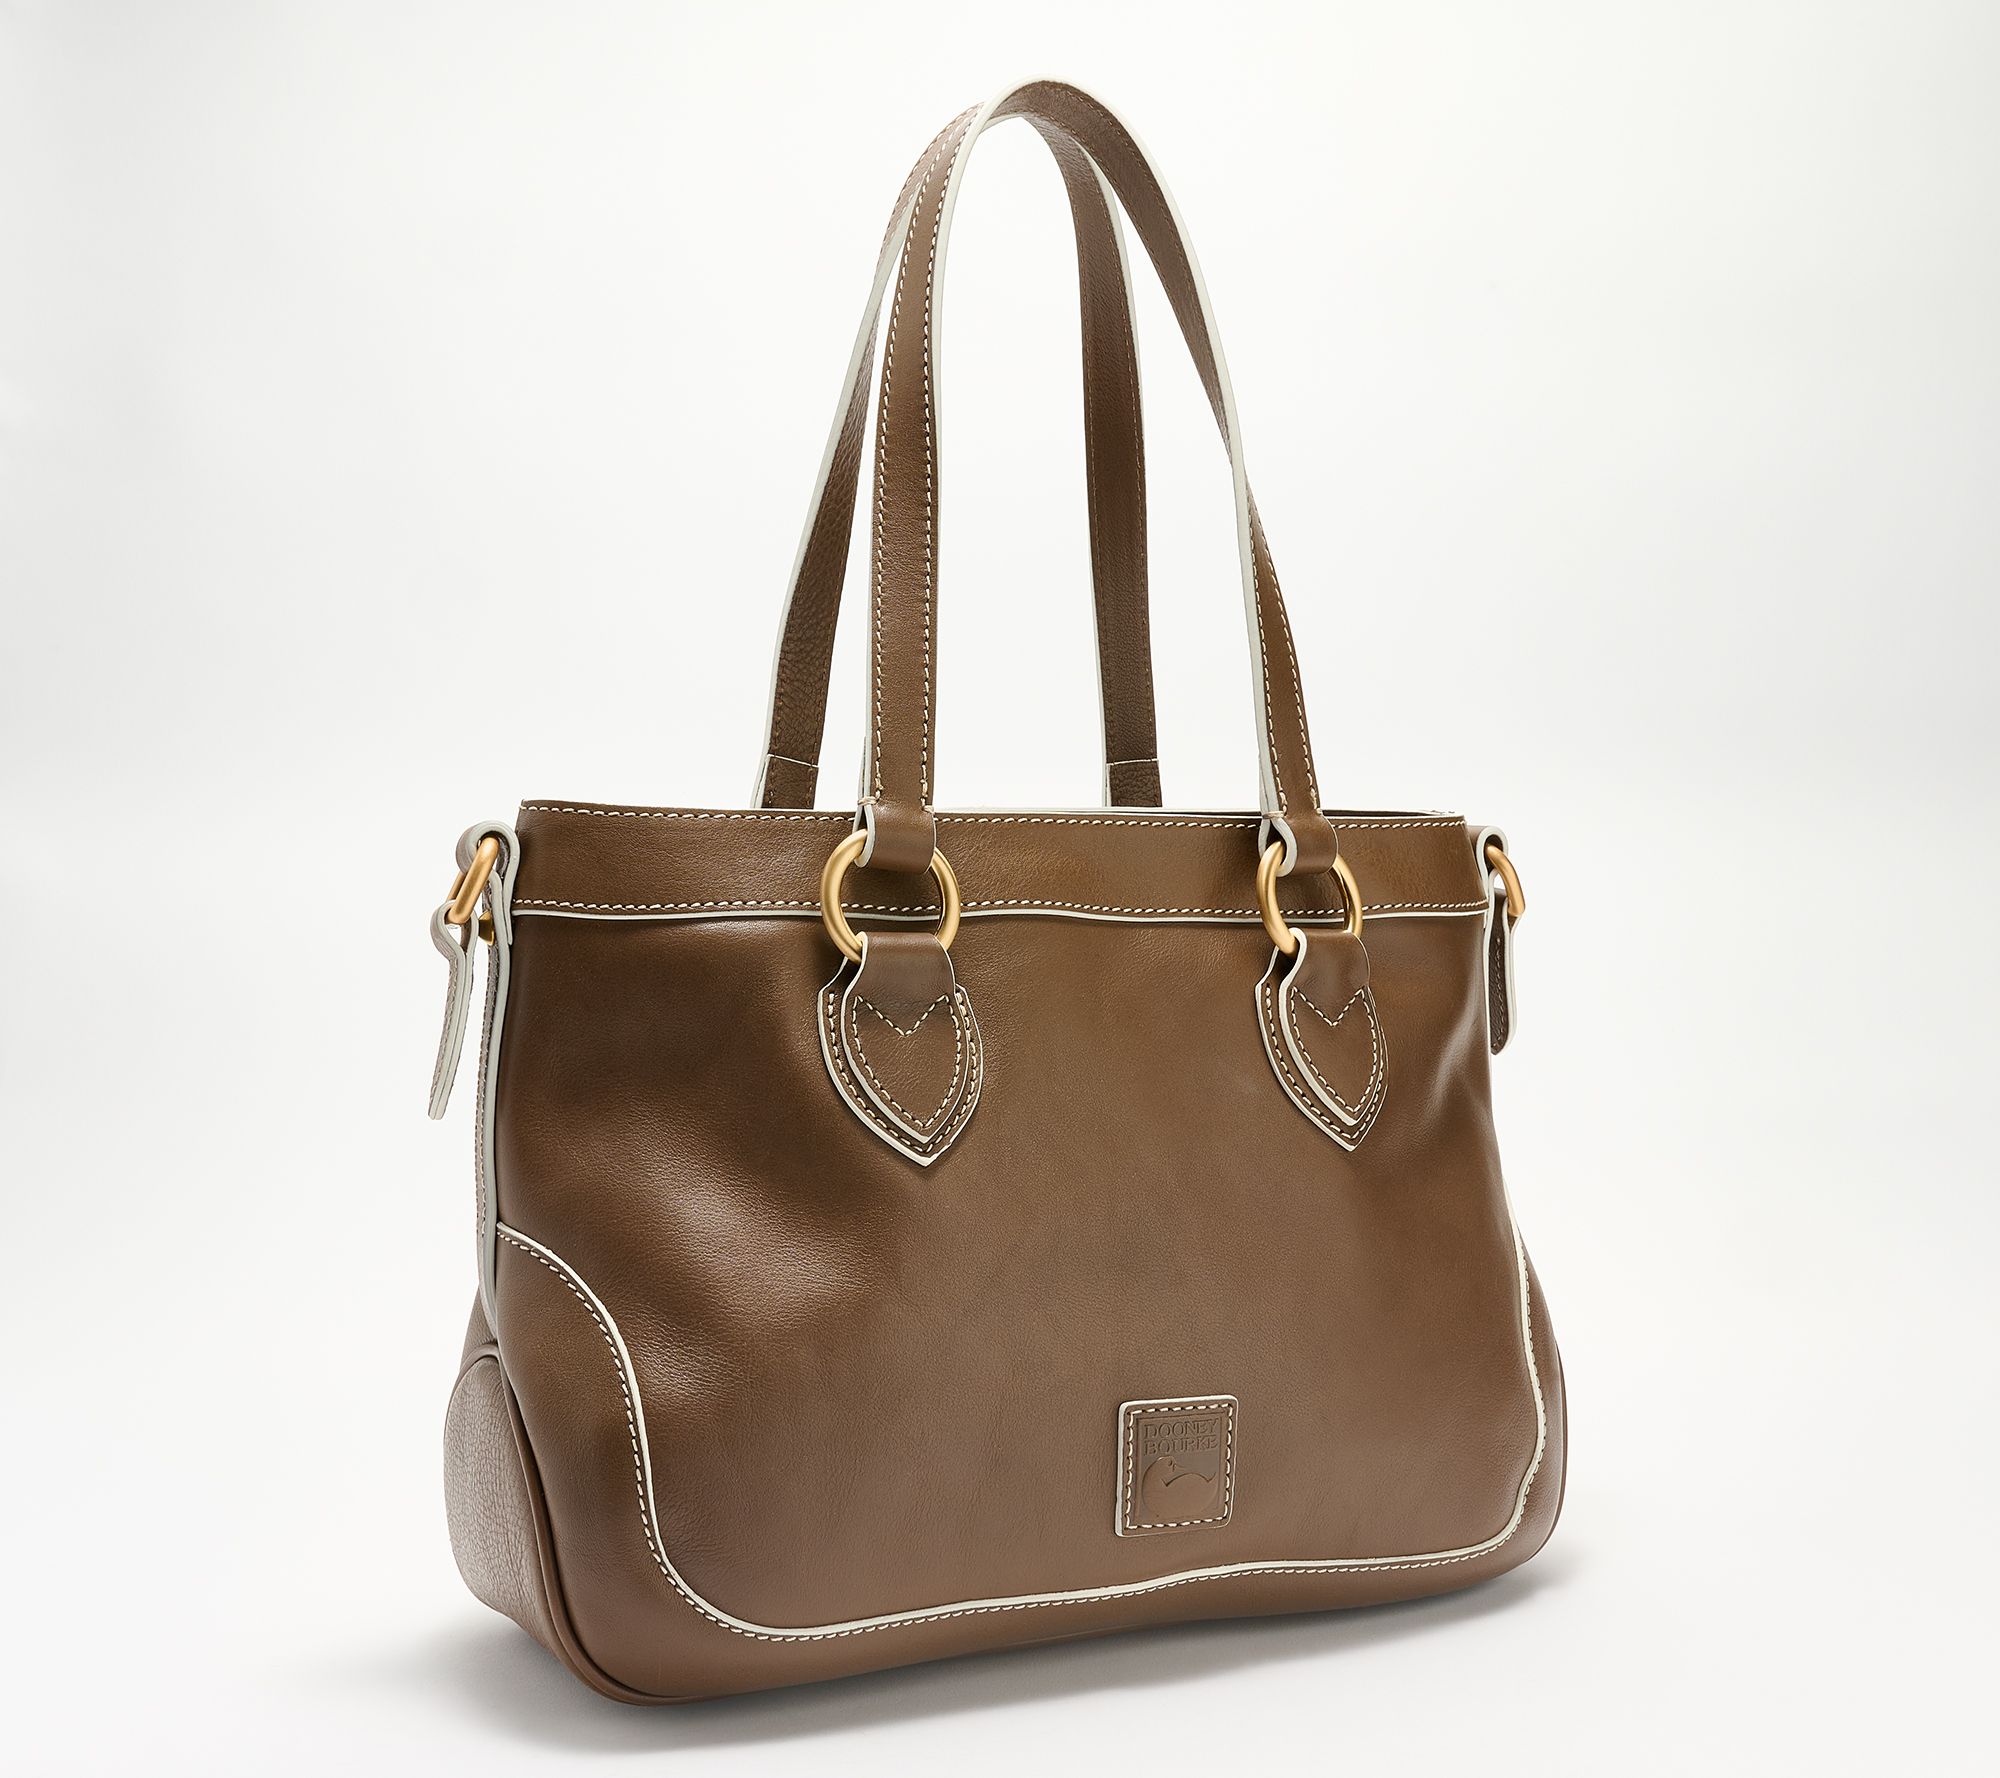 Dooney & Bourke Florentine Leather Shopper Bag ,Chestnut